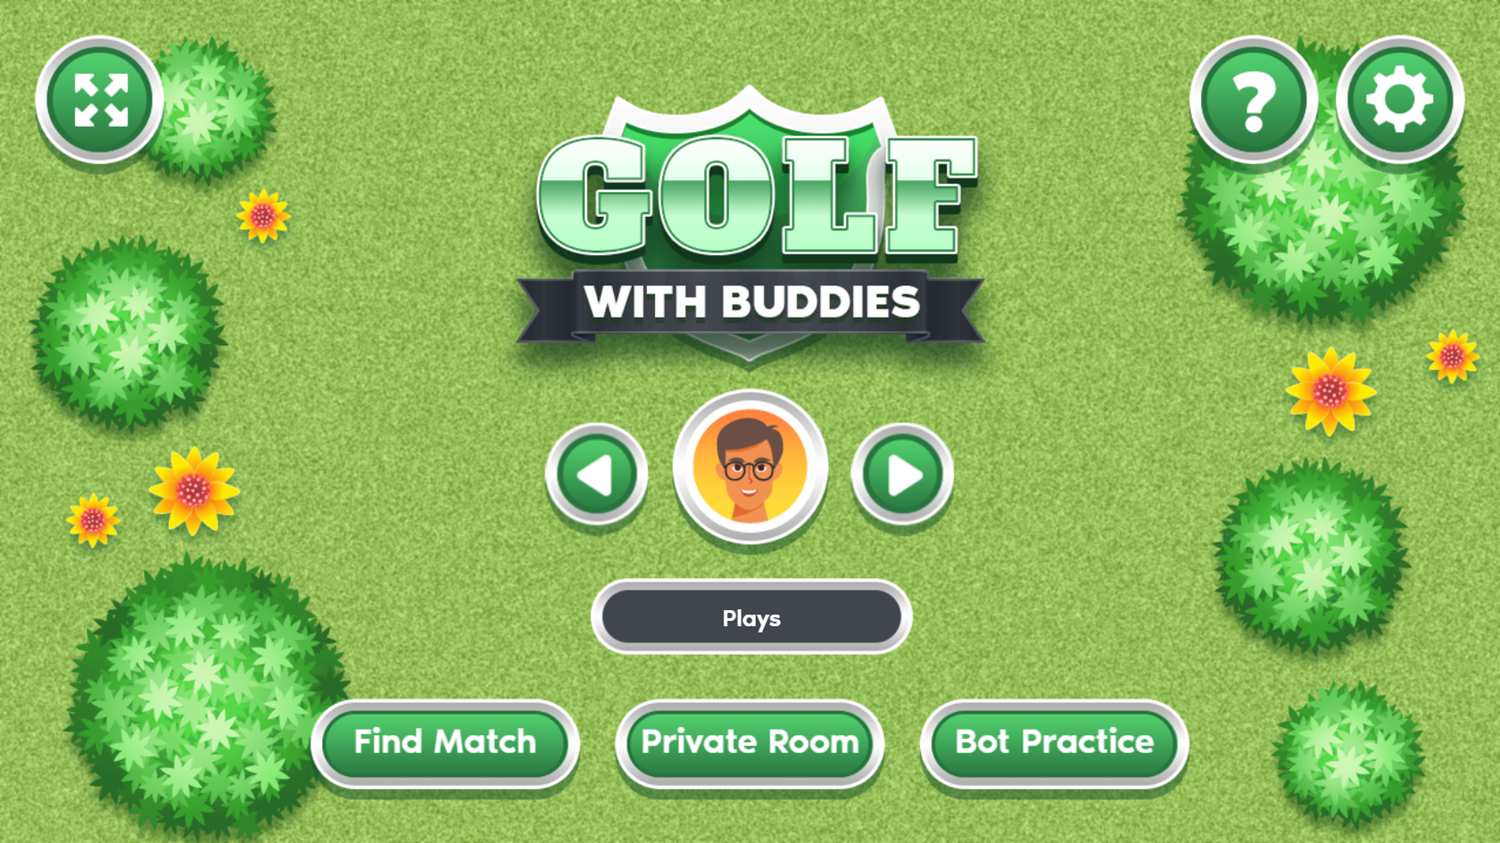 Golf With Buddies Game Welcome Screen Screenshot.